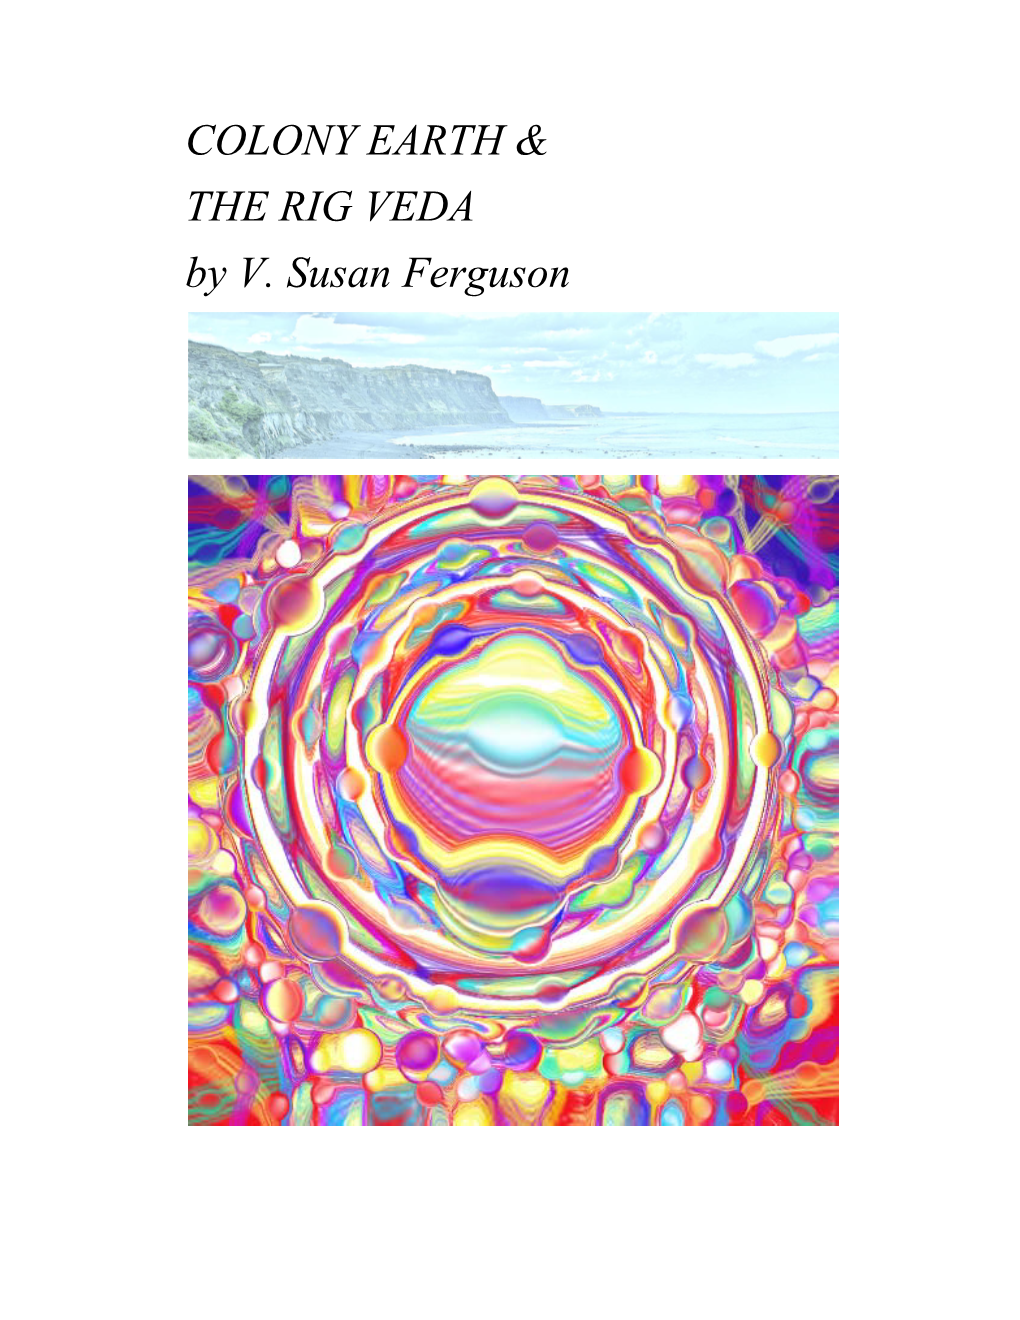 COLONY EARTH & the RIG VEDA by V. Susan Ferguson